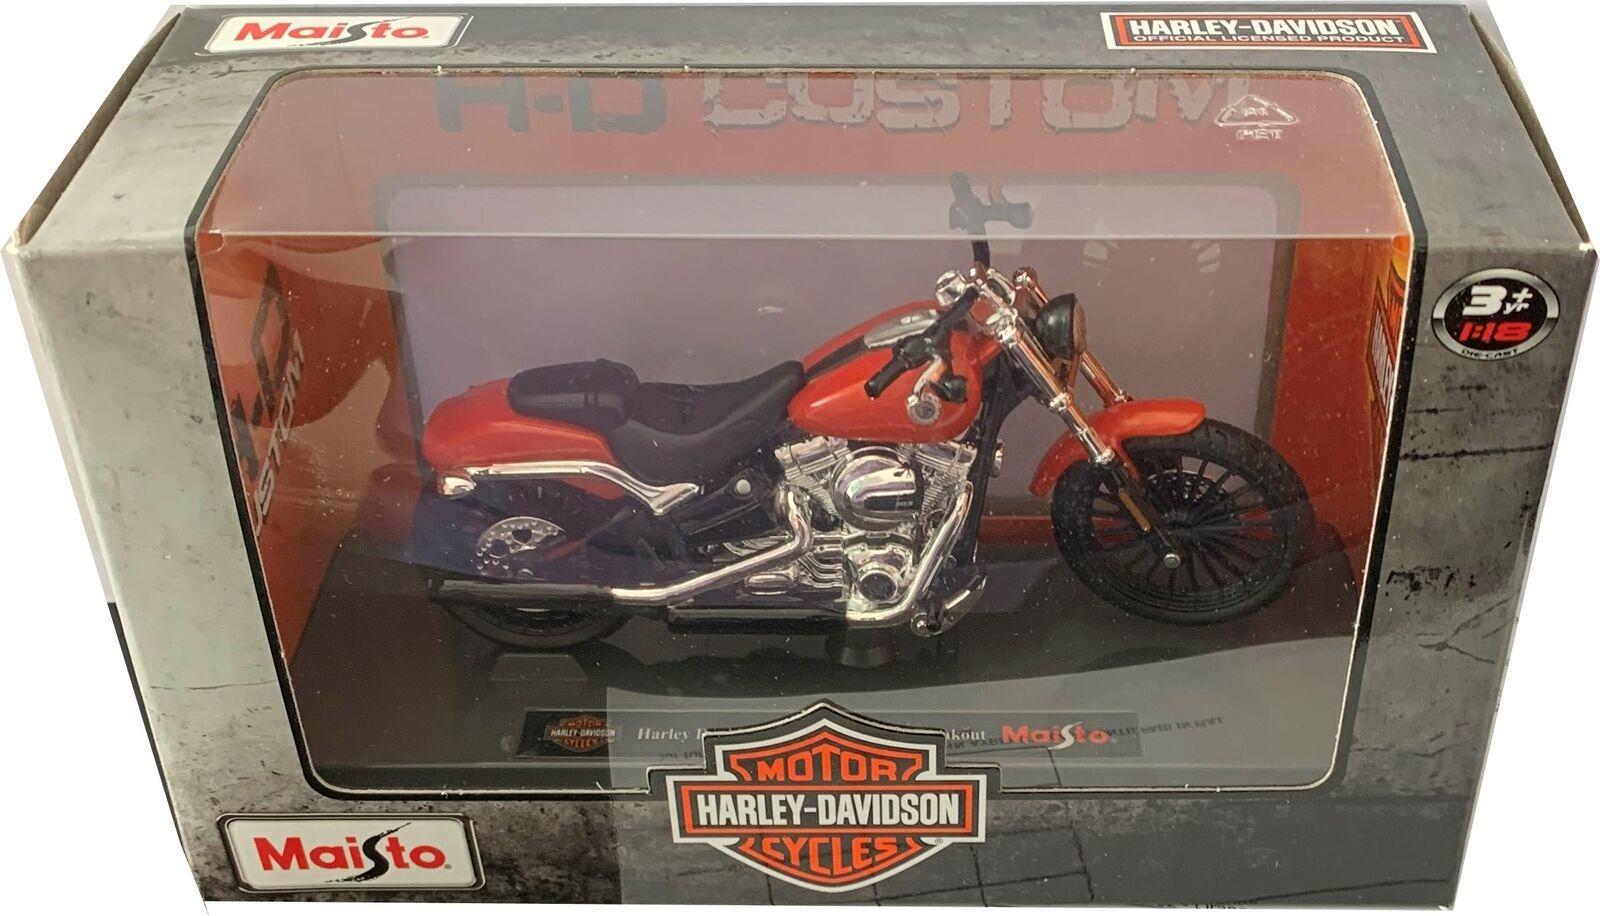 Harley Davidson 2016 Breakout in orange 1:18 scale model from Maisto